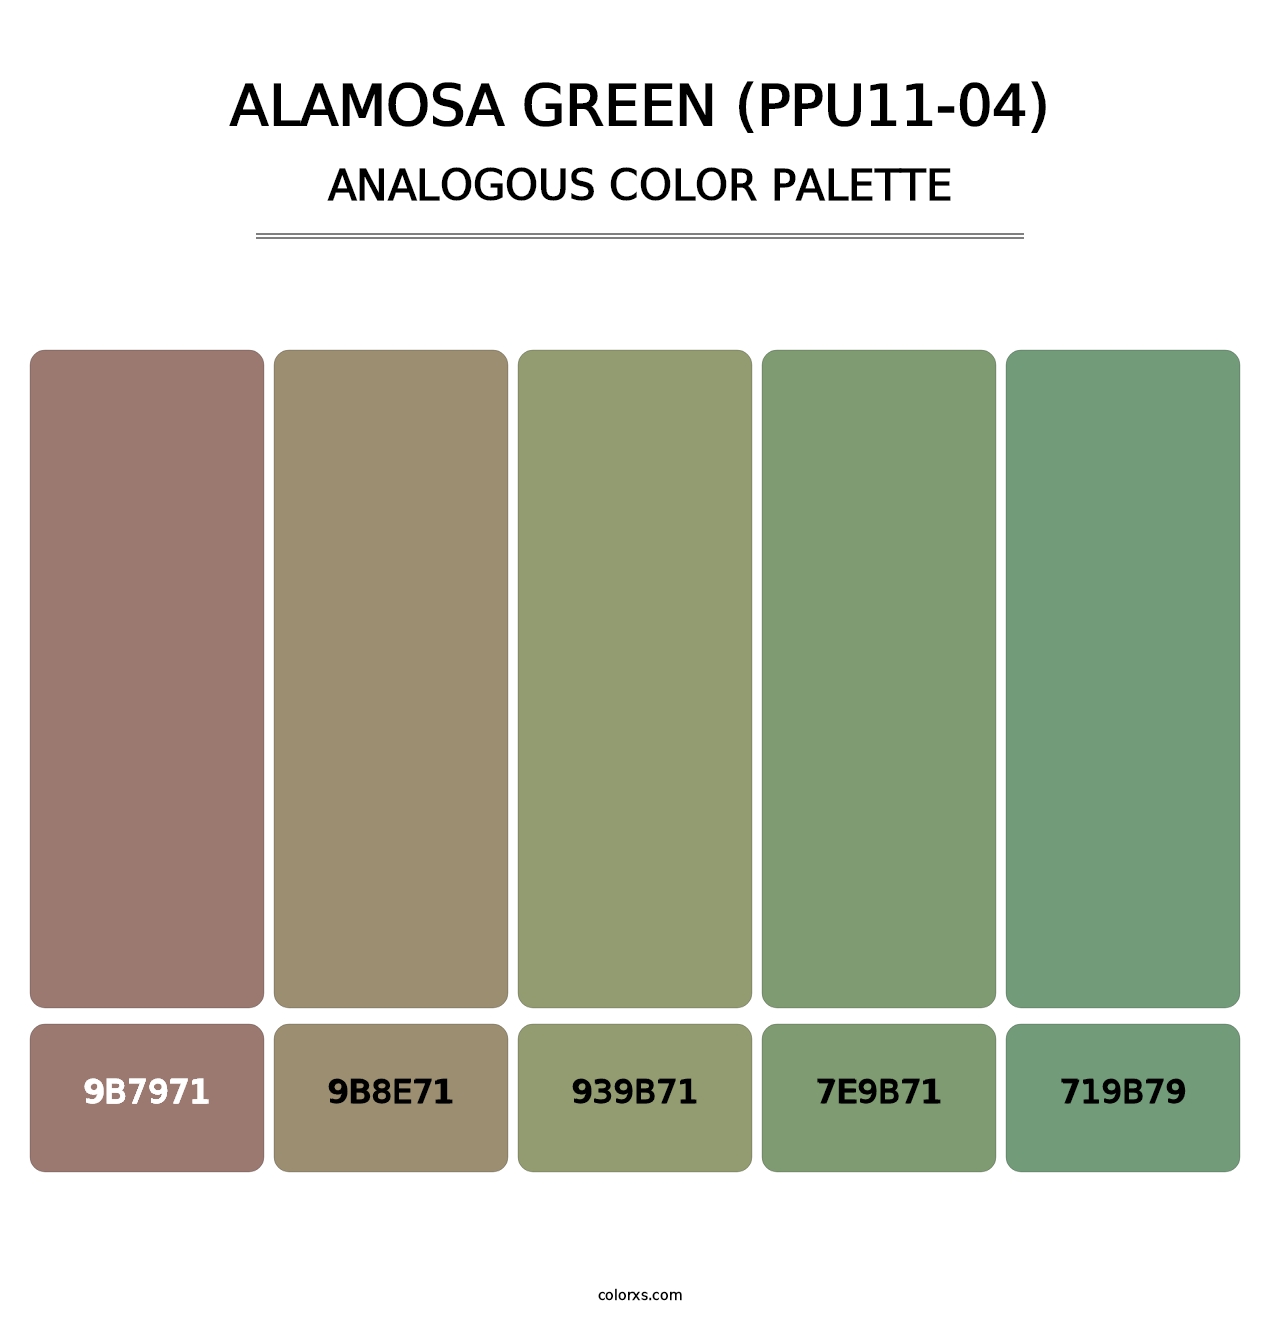 Alamosa Green (PPU11-04) - Analogous Color Palette